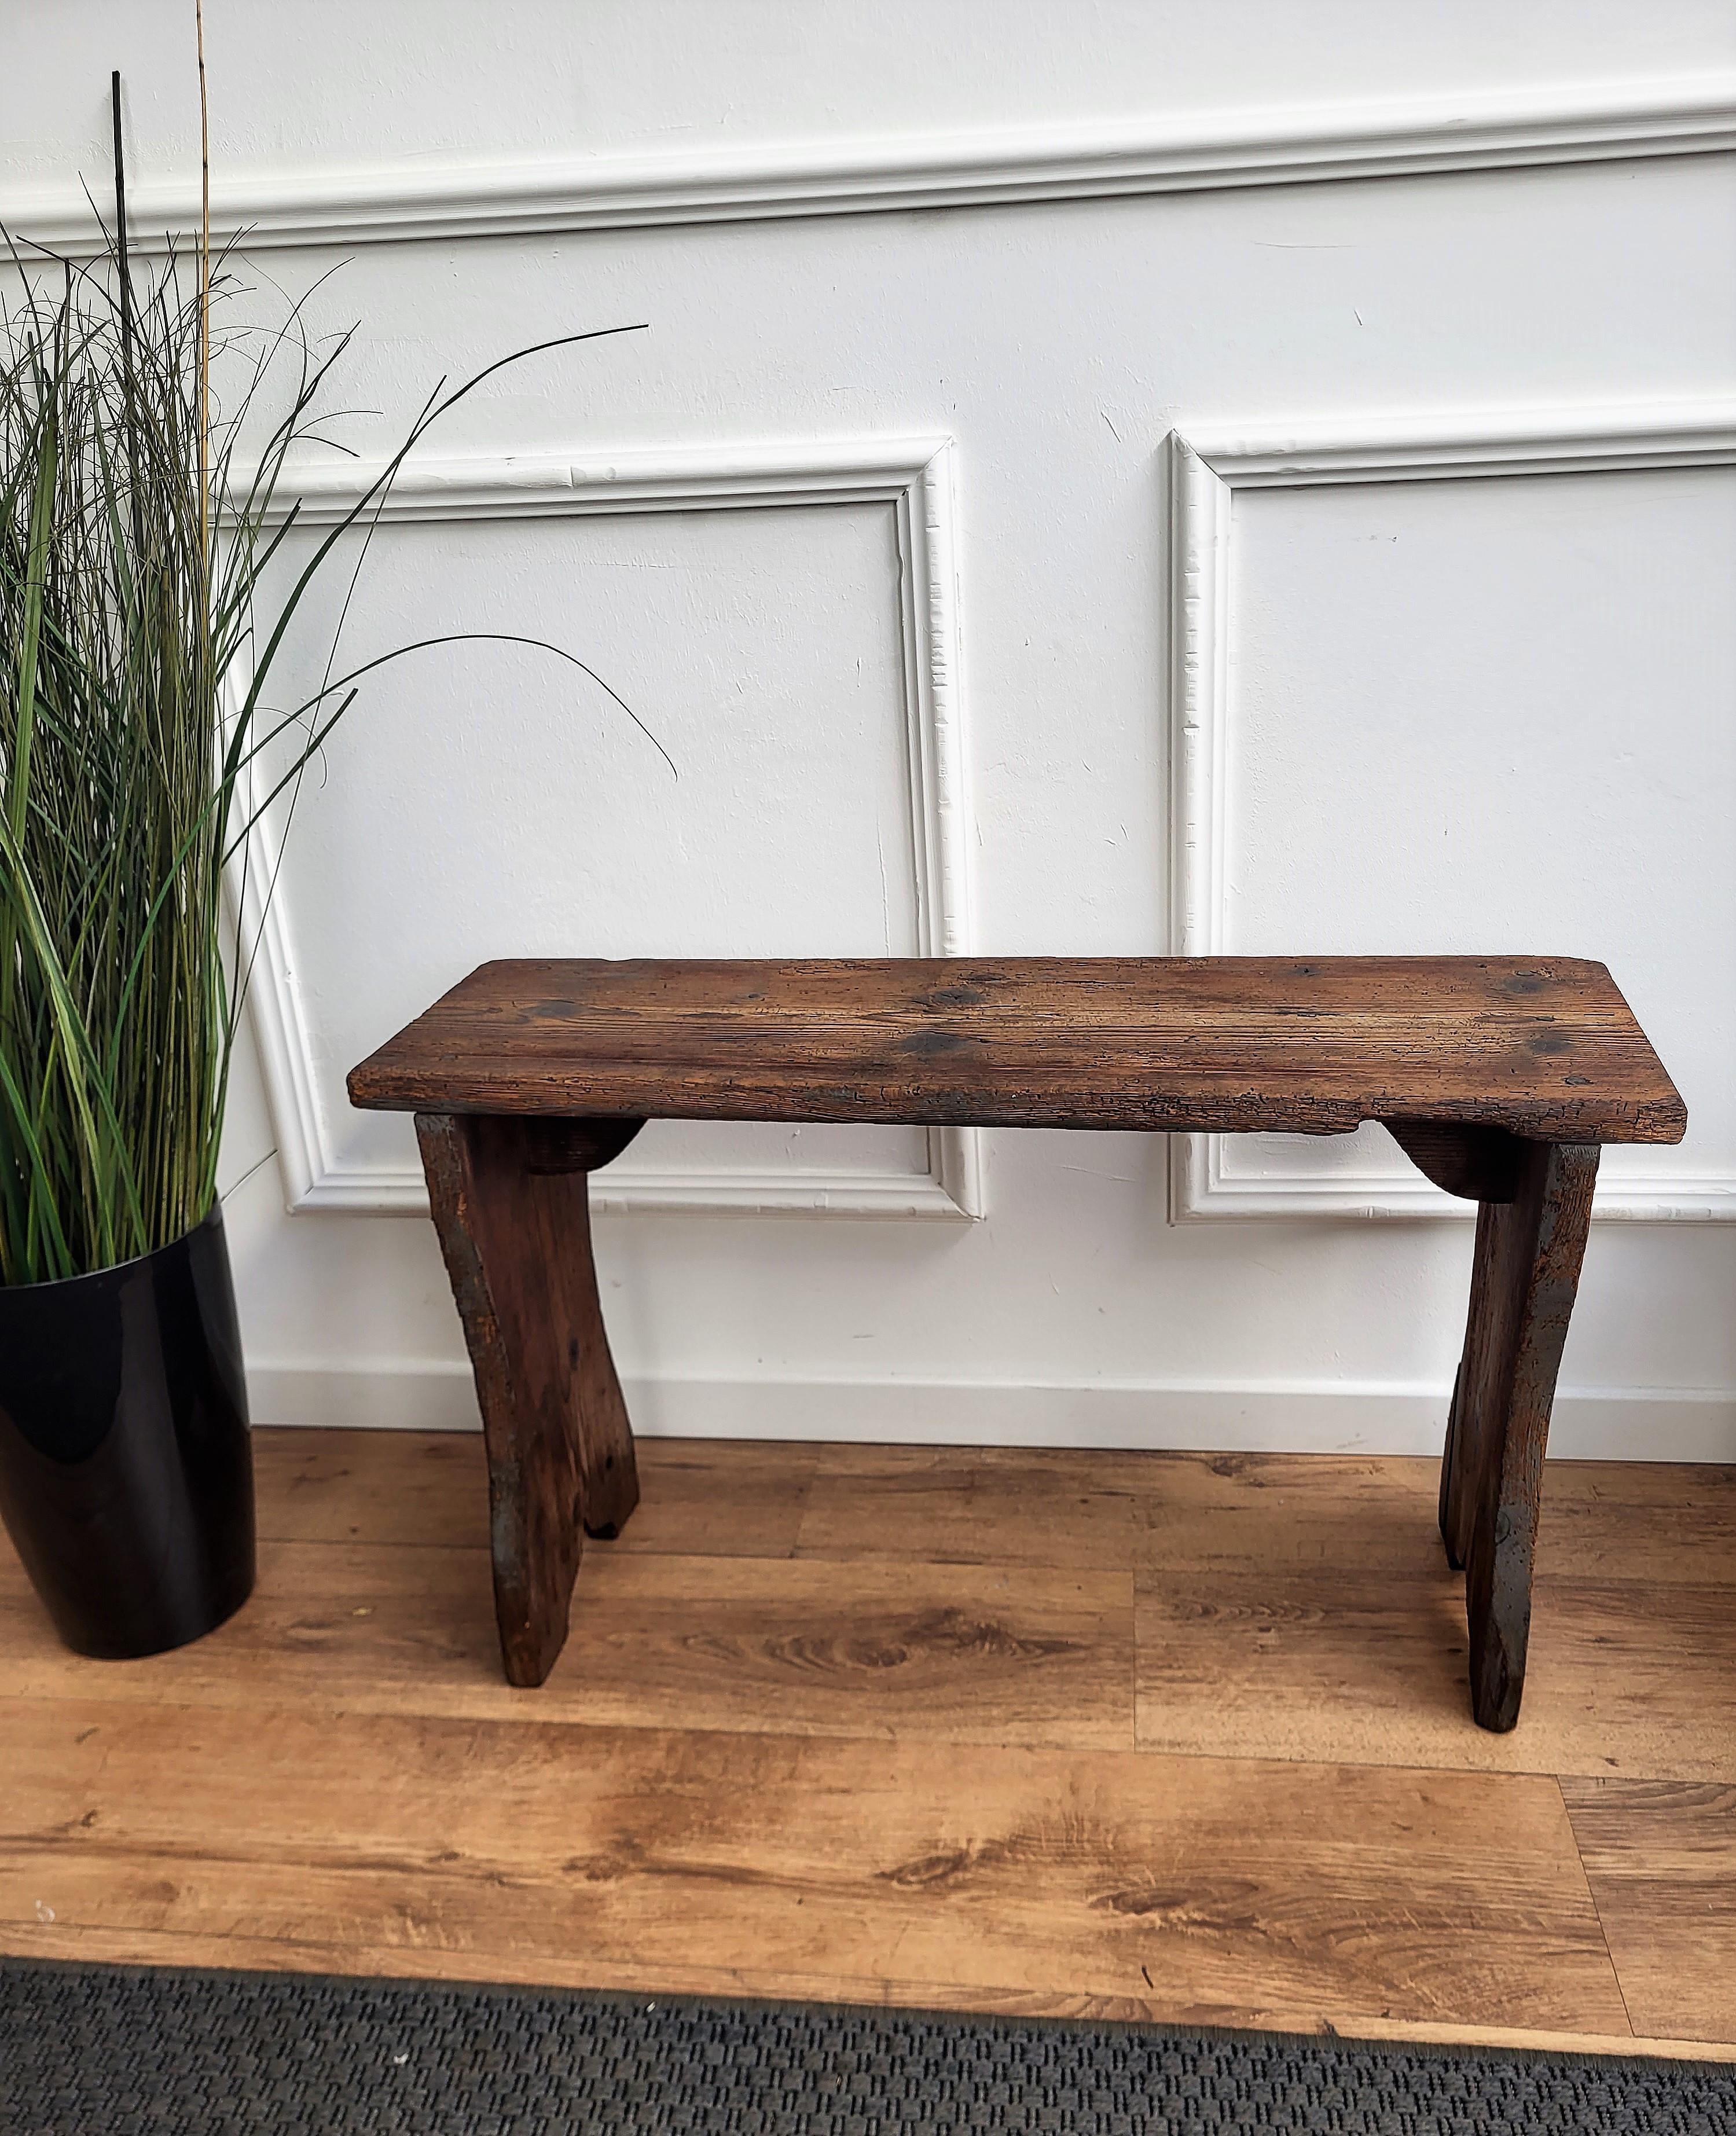 Primitive Rustic Minimal Italian Midcentury Wooden Side Table Bench Stool 2